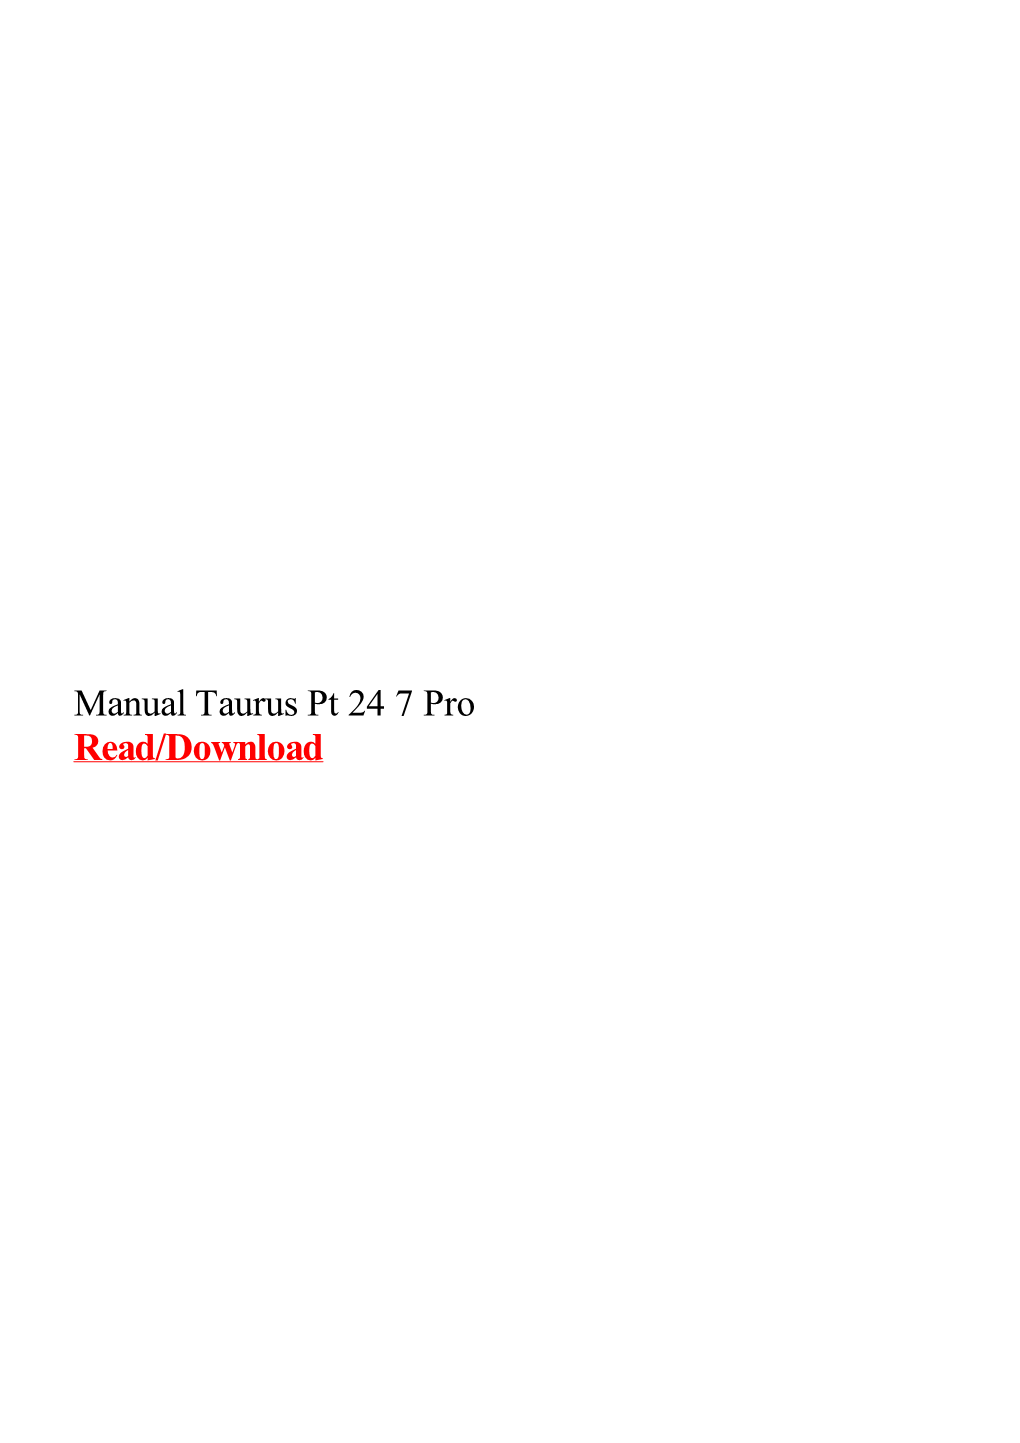 Manual Taurus Pt 24 7 Pro